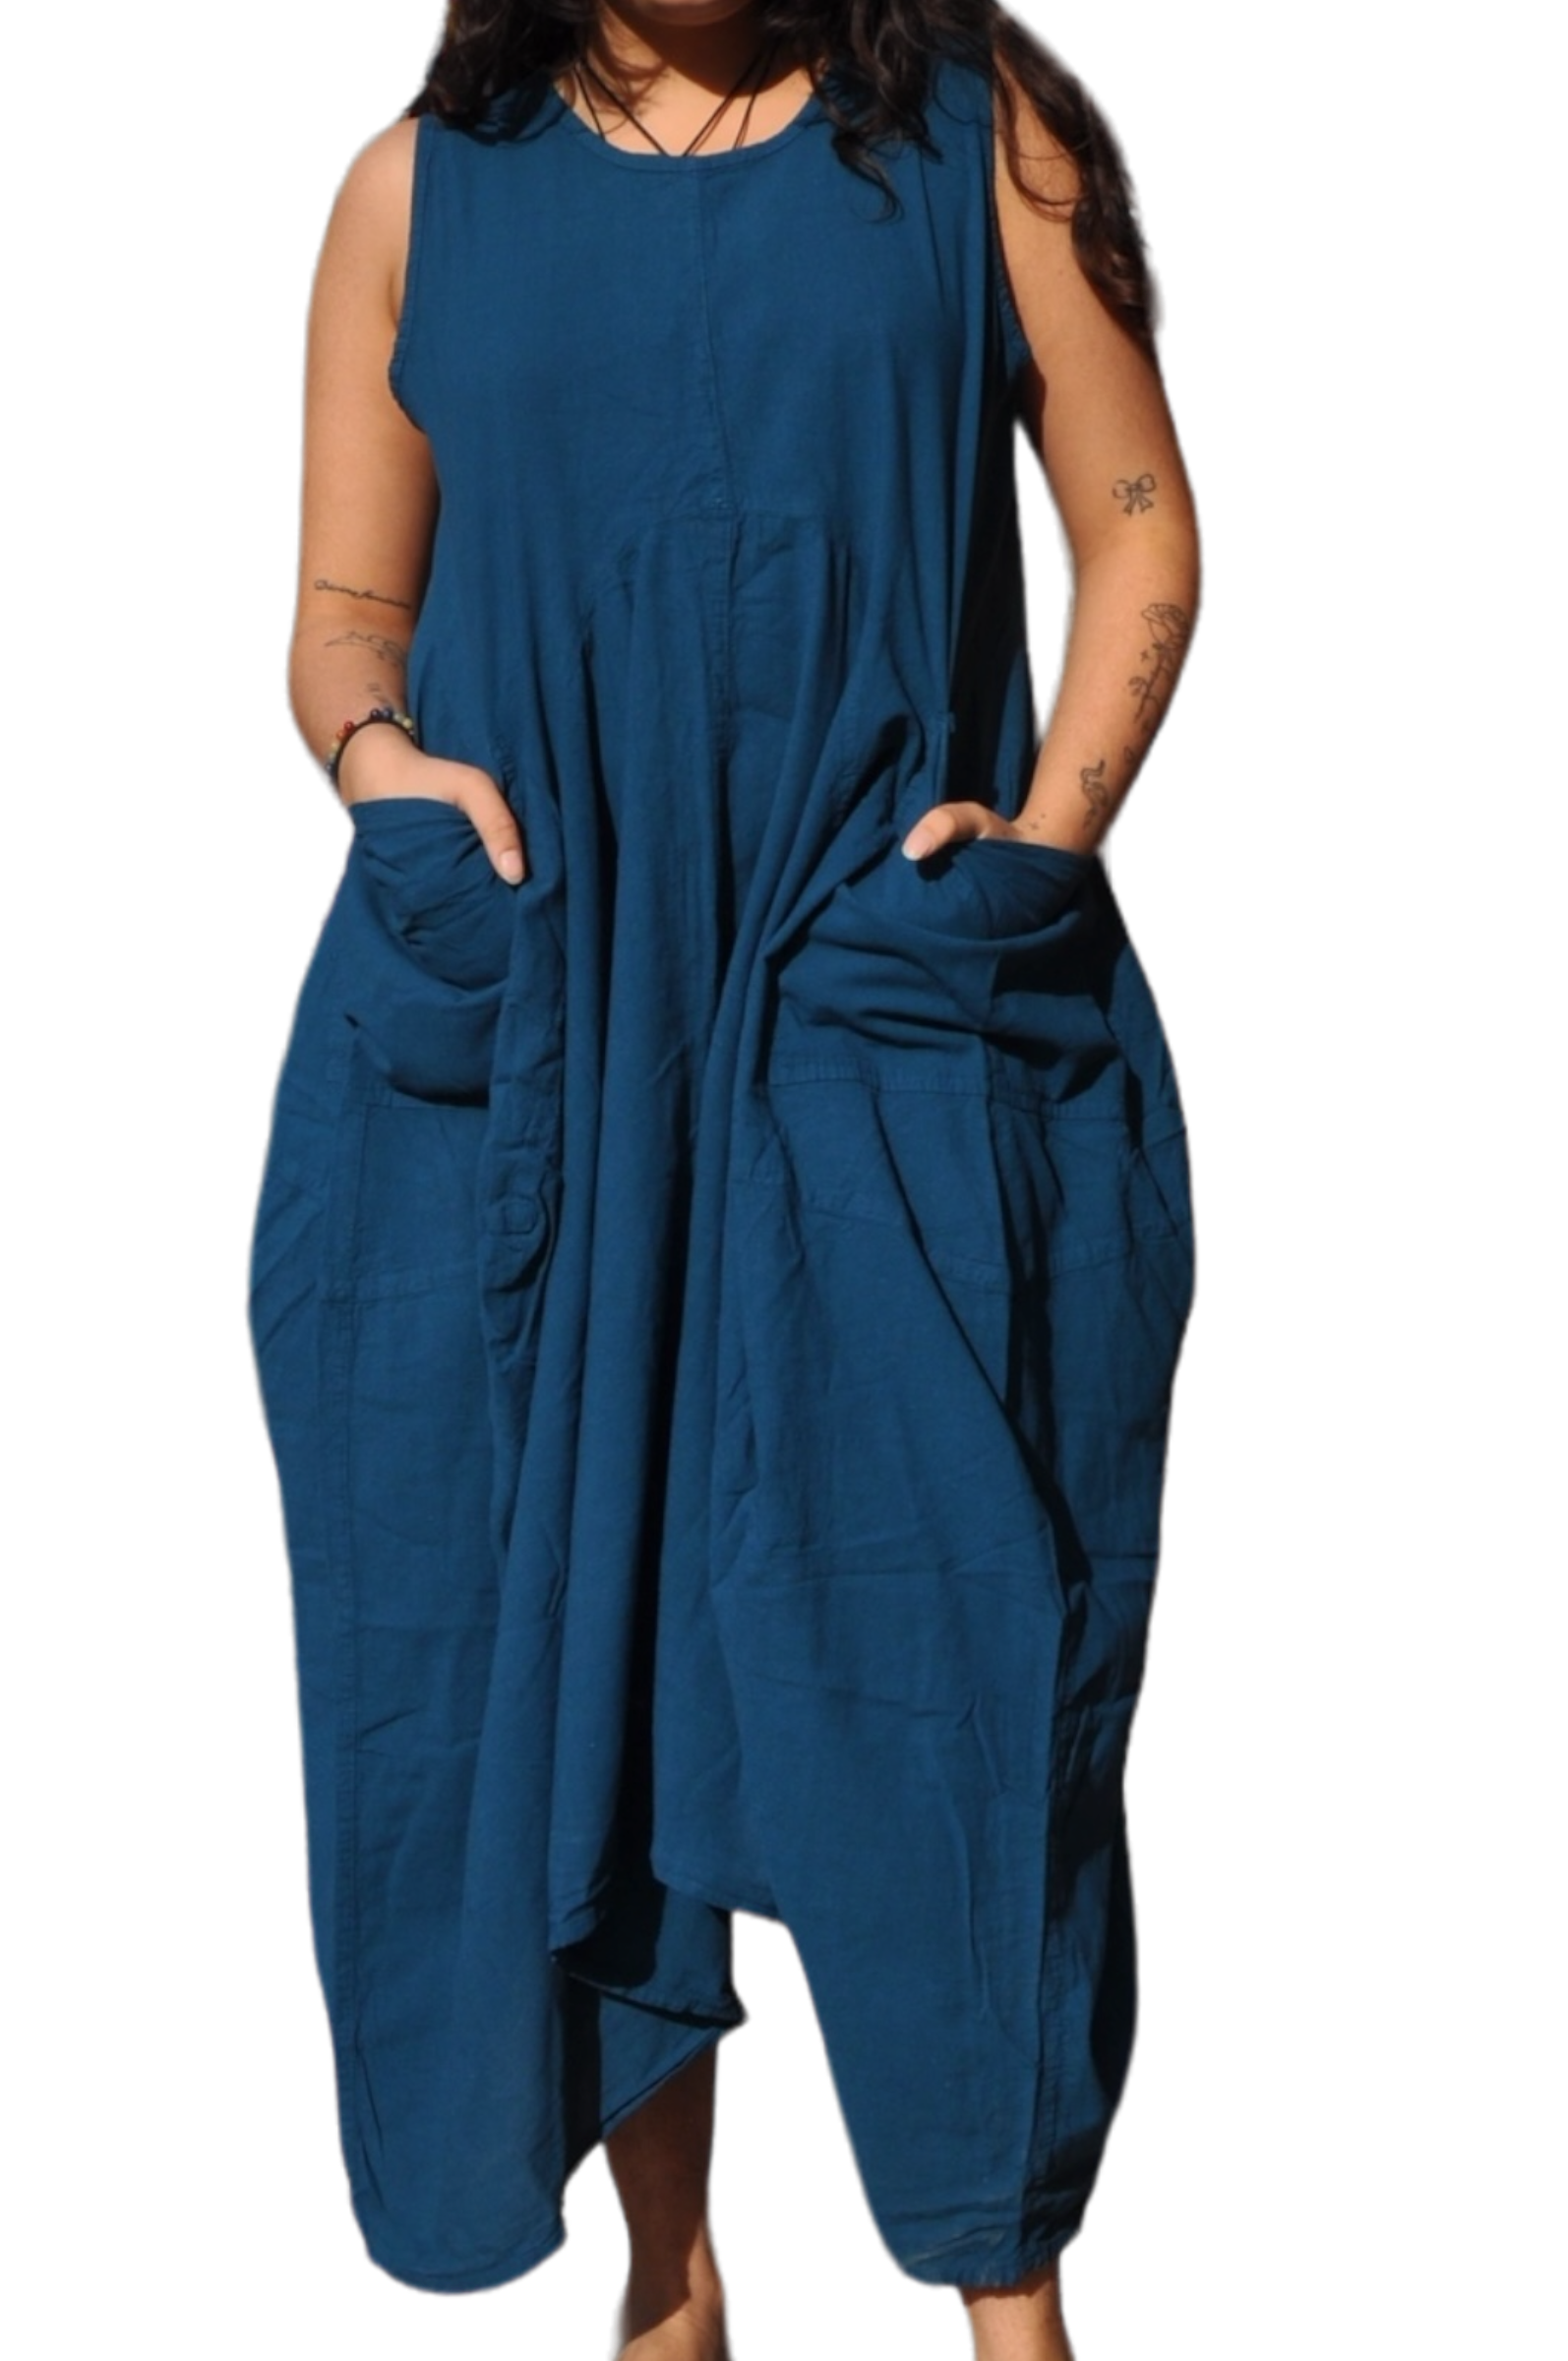 SUNDARI CAPRI PANTS - New Design! – Queen of Hearts Clothing